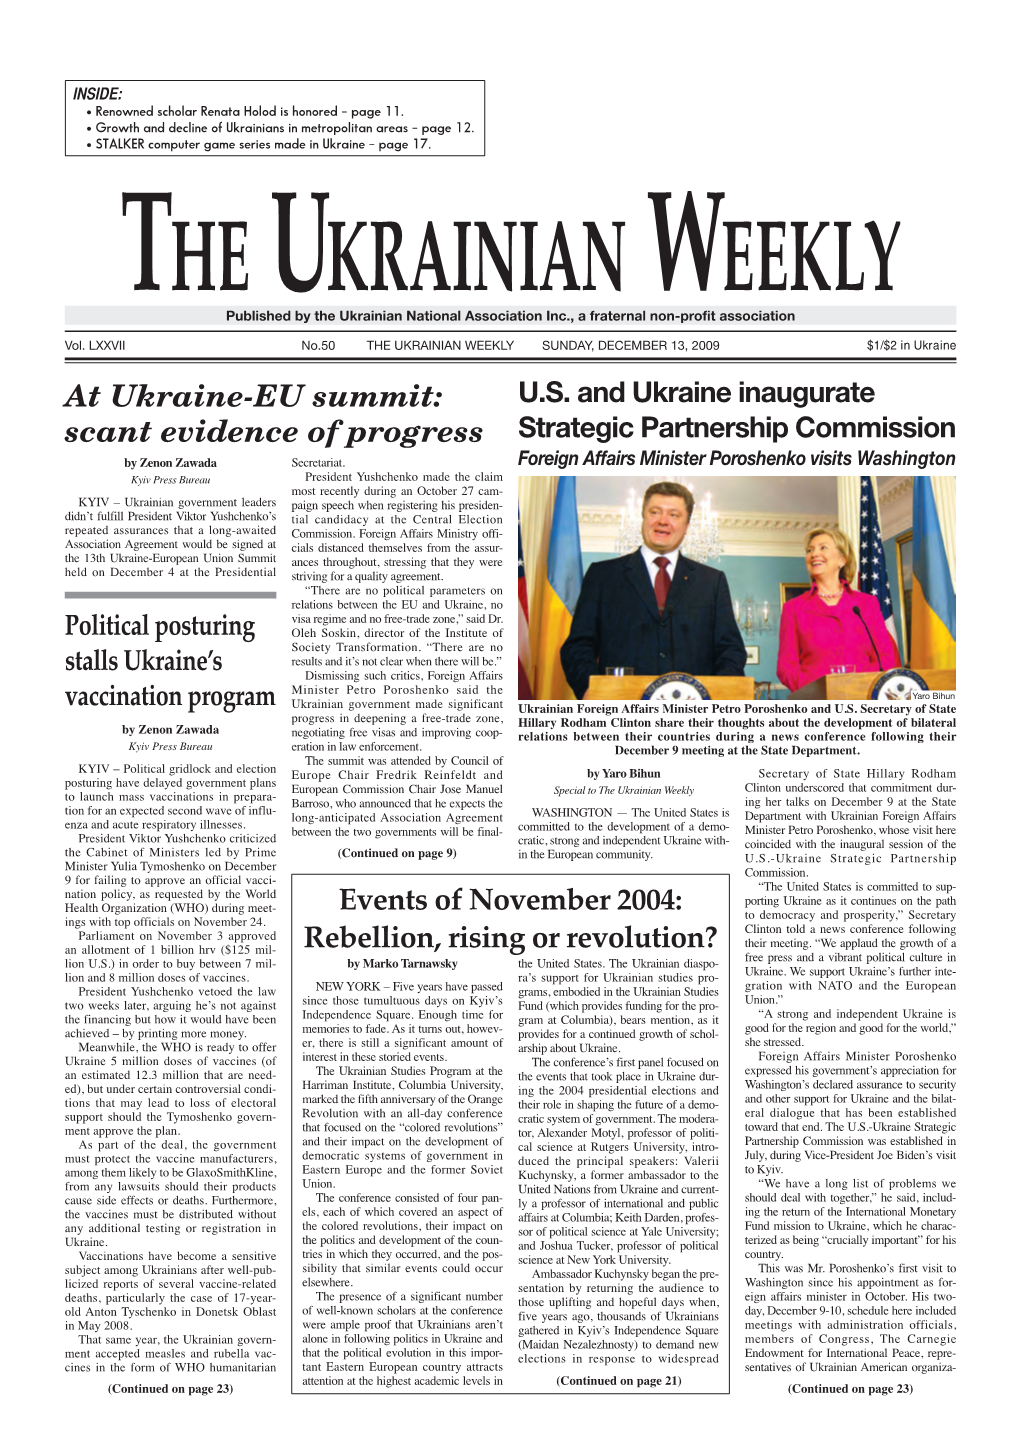 The Ukrainian Weekly 2009, No.50